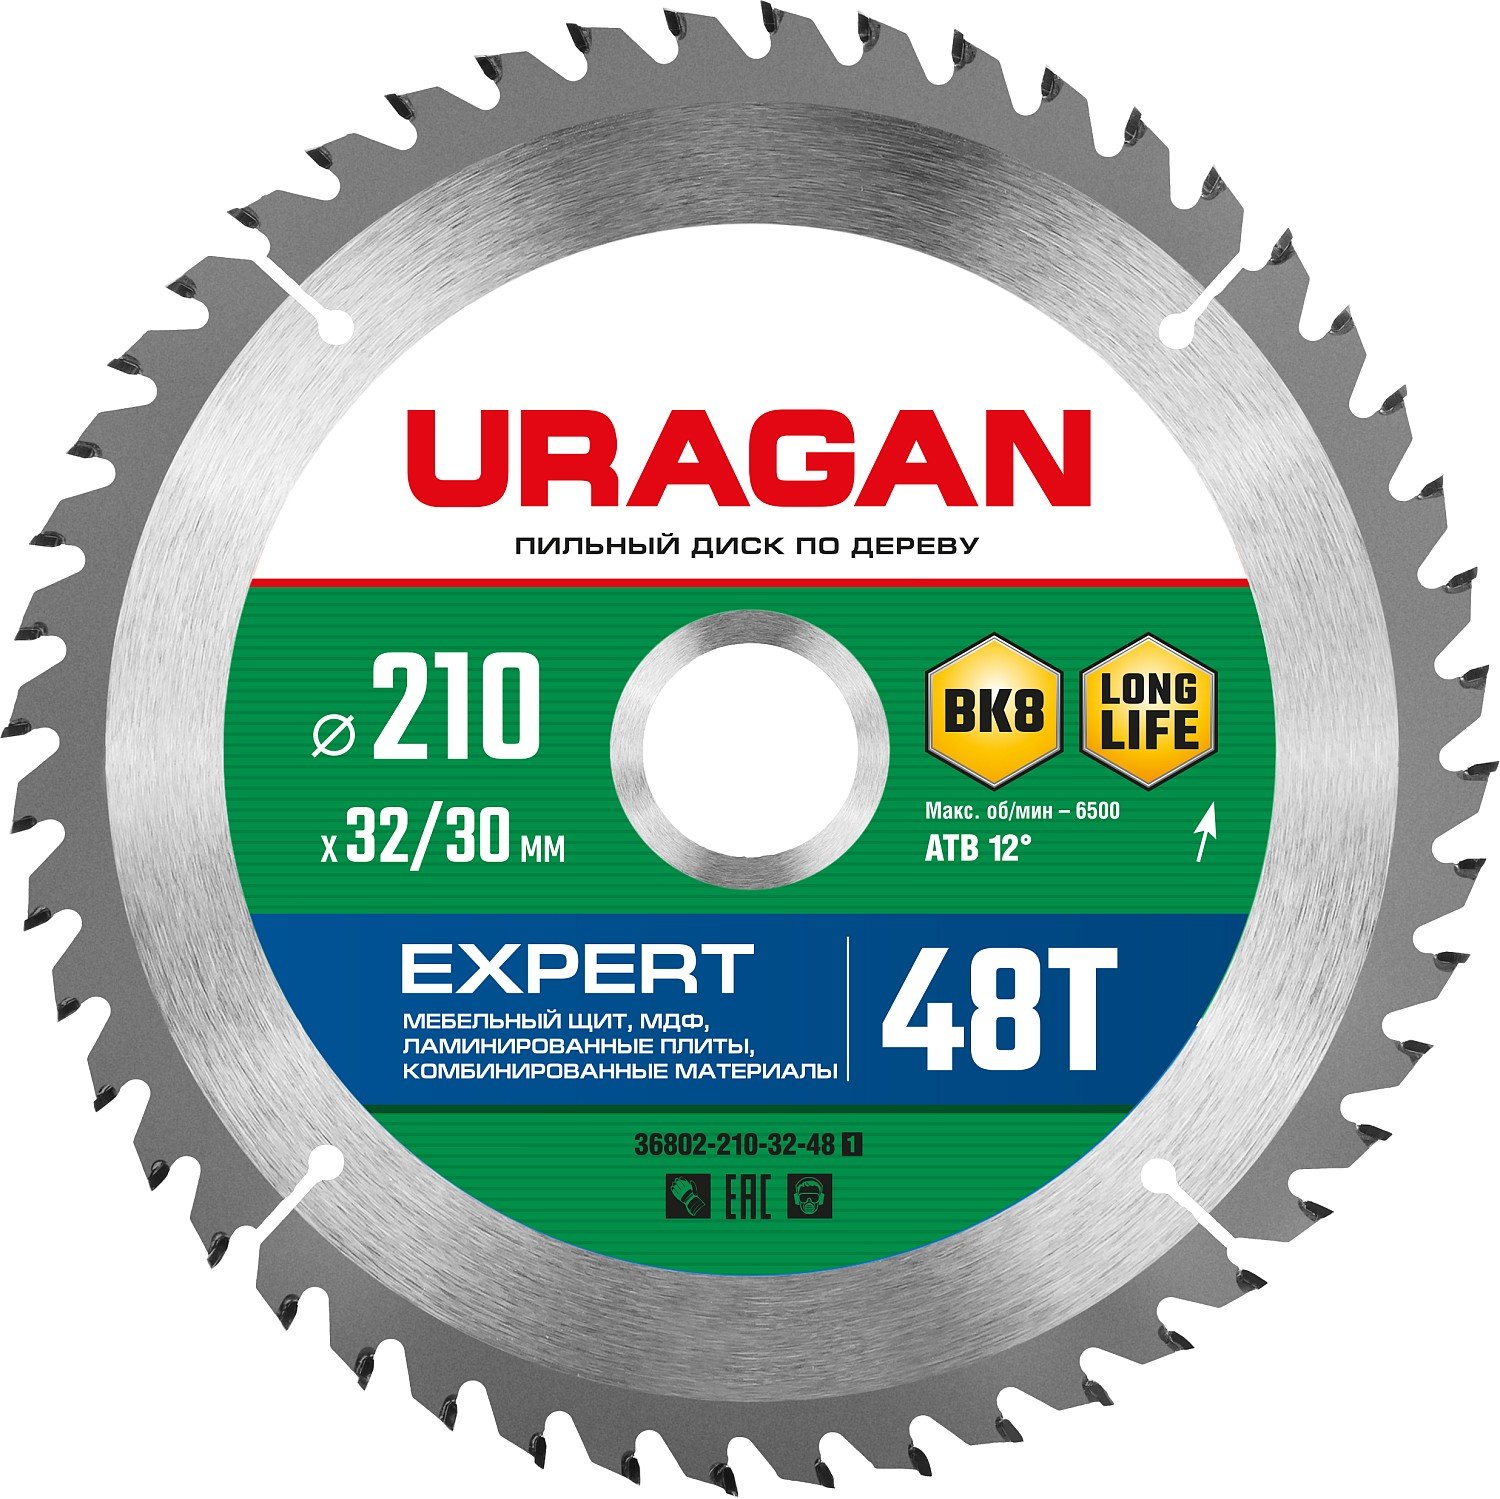 URAGAN Expert 21032 30 48,    , (36802-210-32-48_z01)